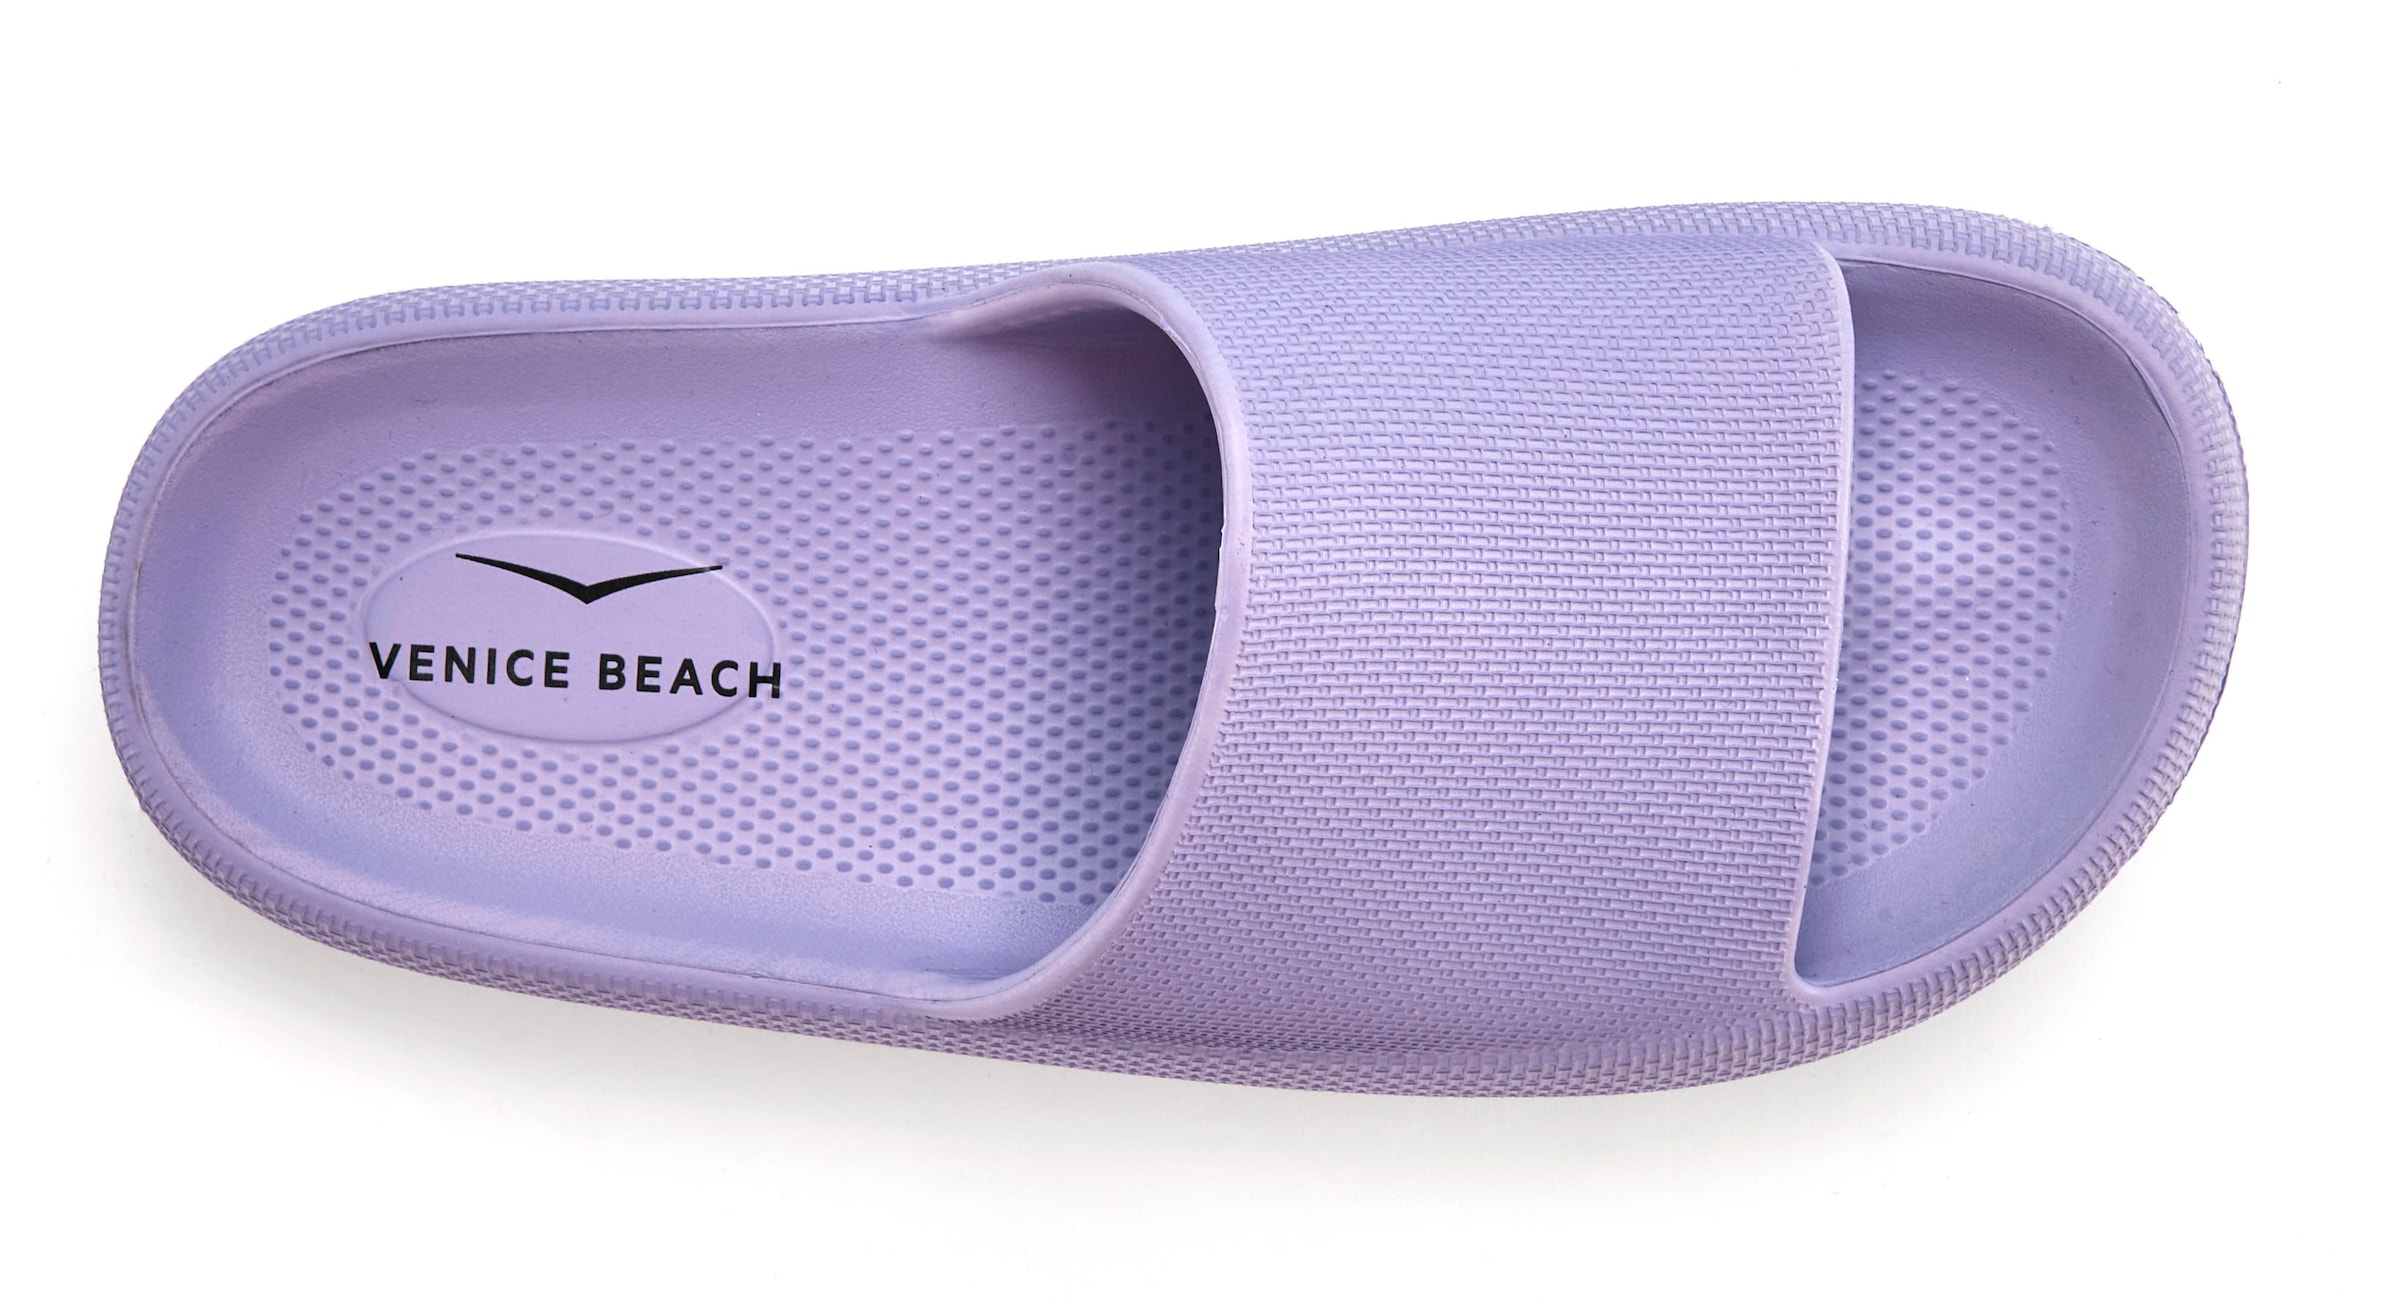 Venice Beach Pantolette, Mule, Sandale, offener Schuh aus wasserabweisendem Material VEGAN